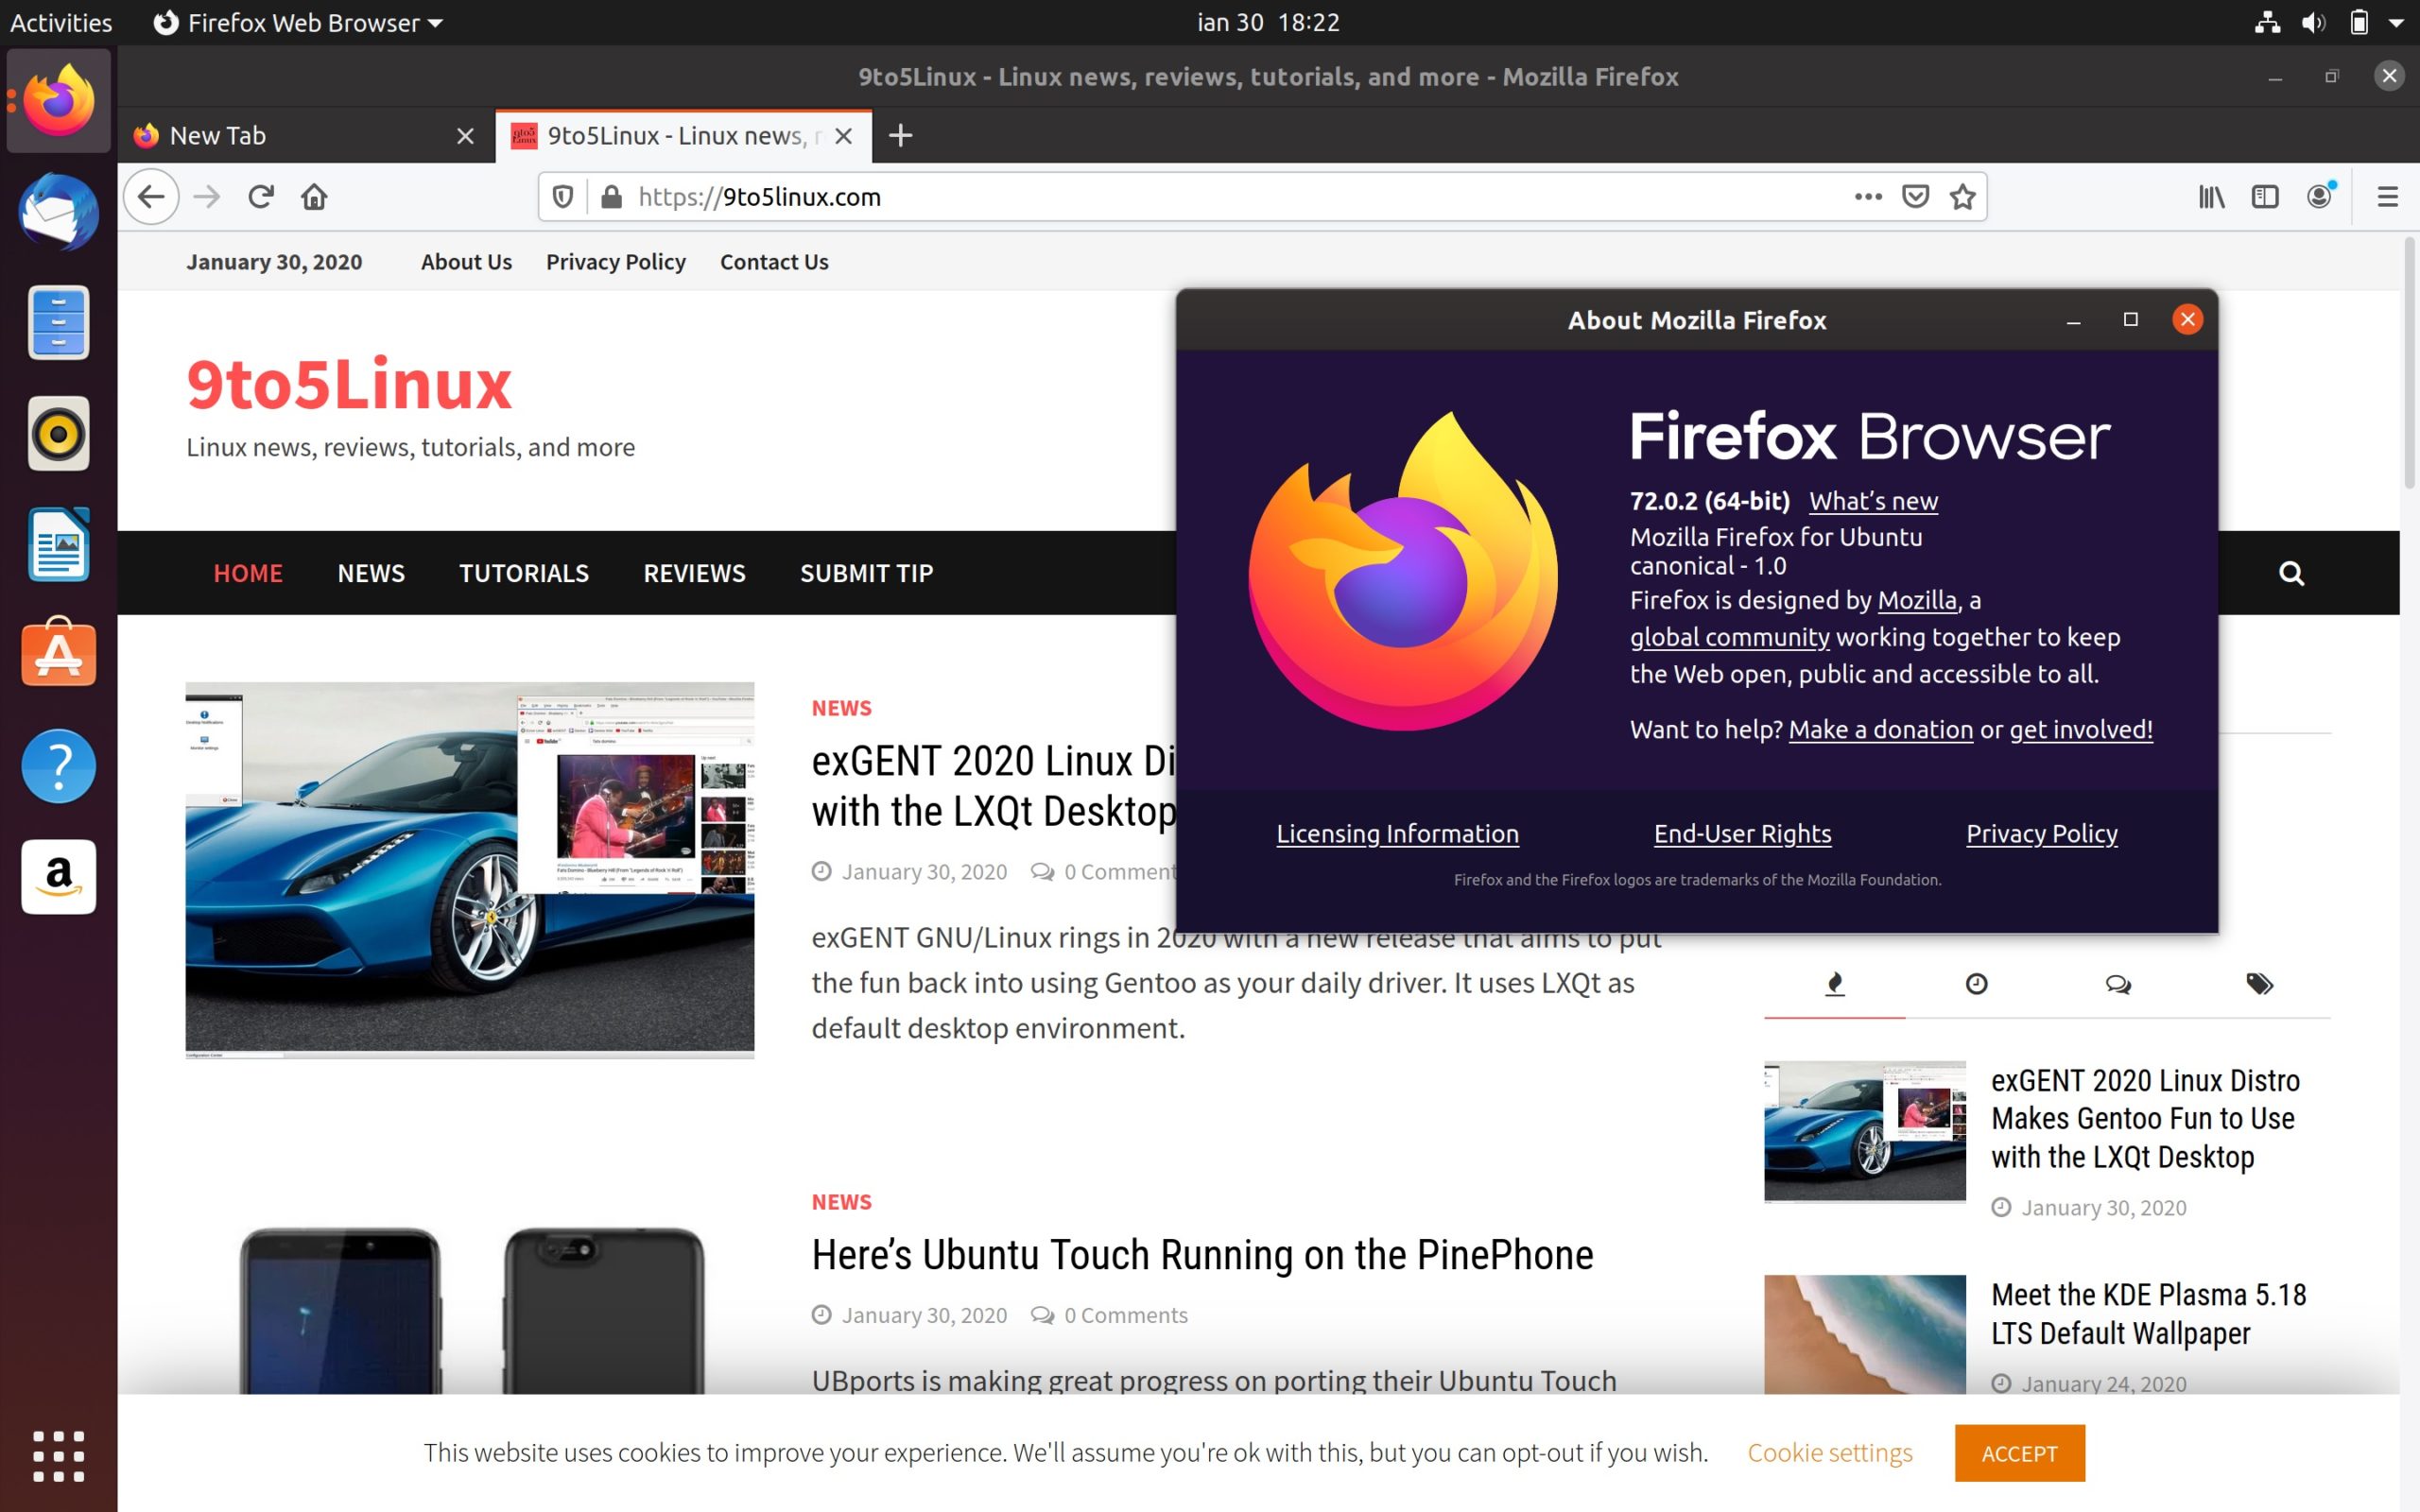 Firefox 72.0.2 Lands in Ubuntu’s Repos, Minor Regressions Fixed